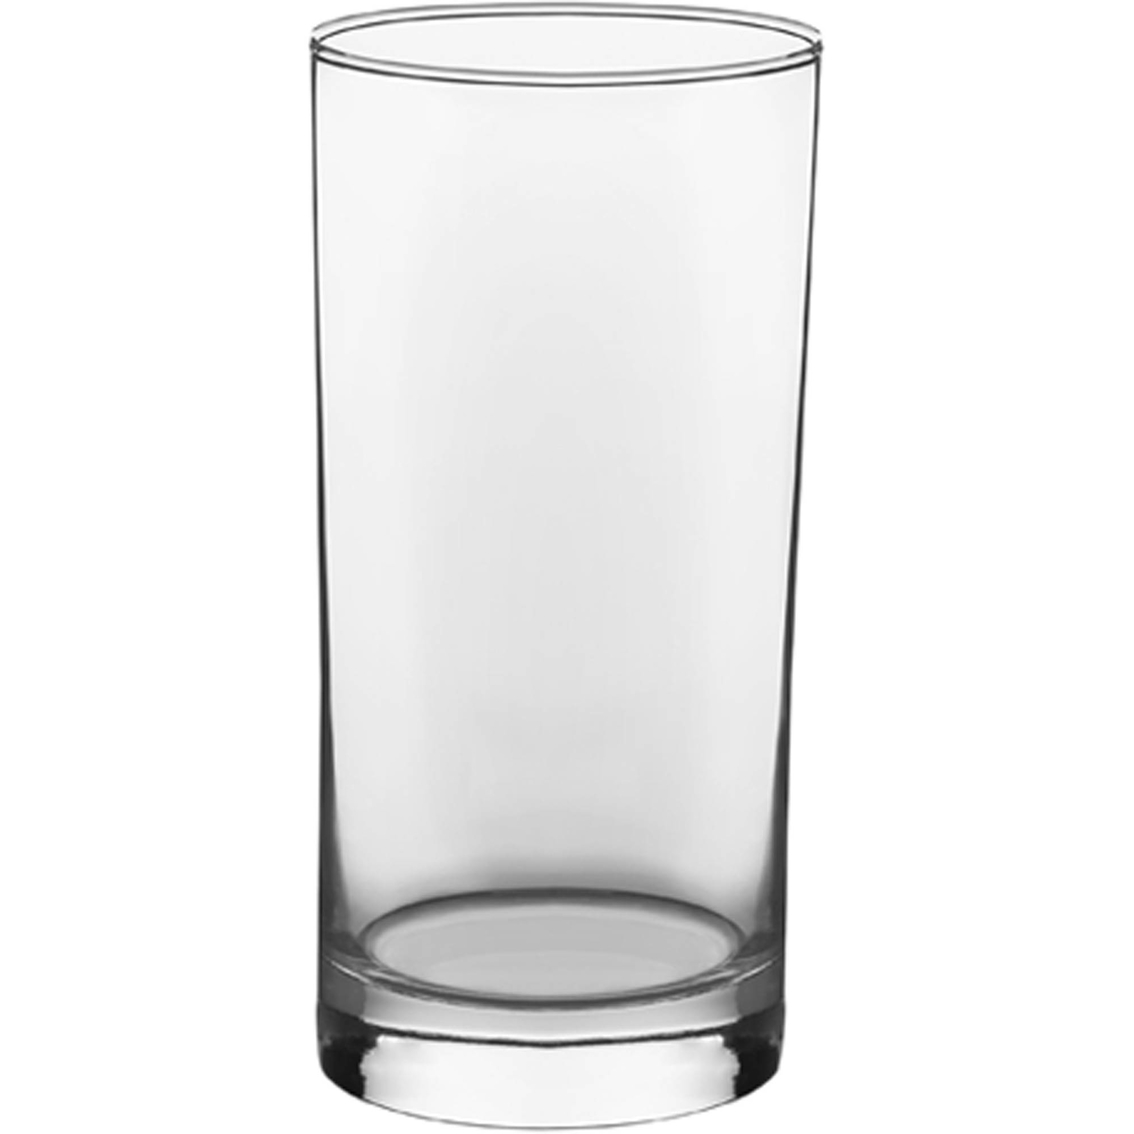 Libbey Glass 16-pc. Province Set - Image 2 of 5